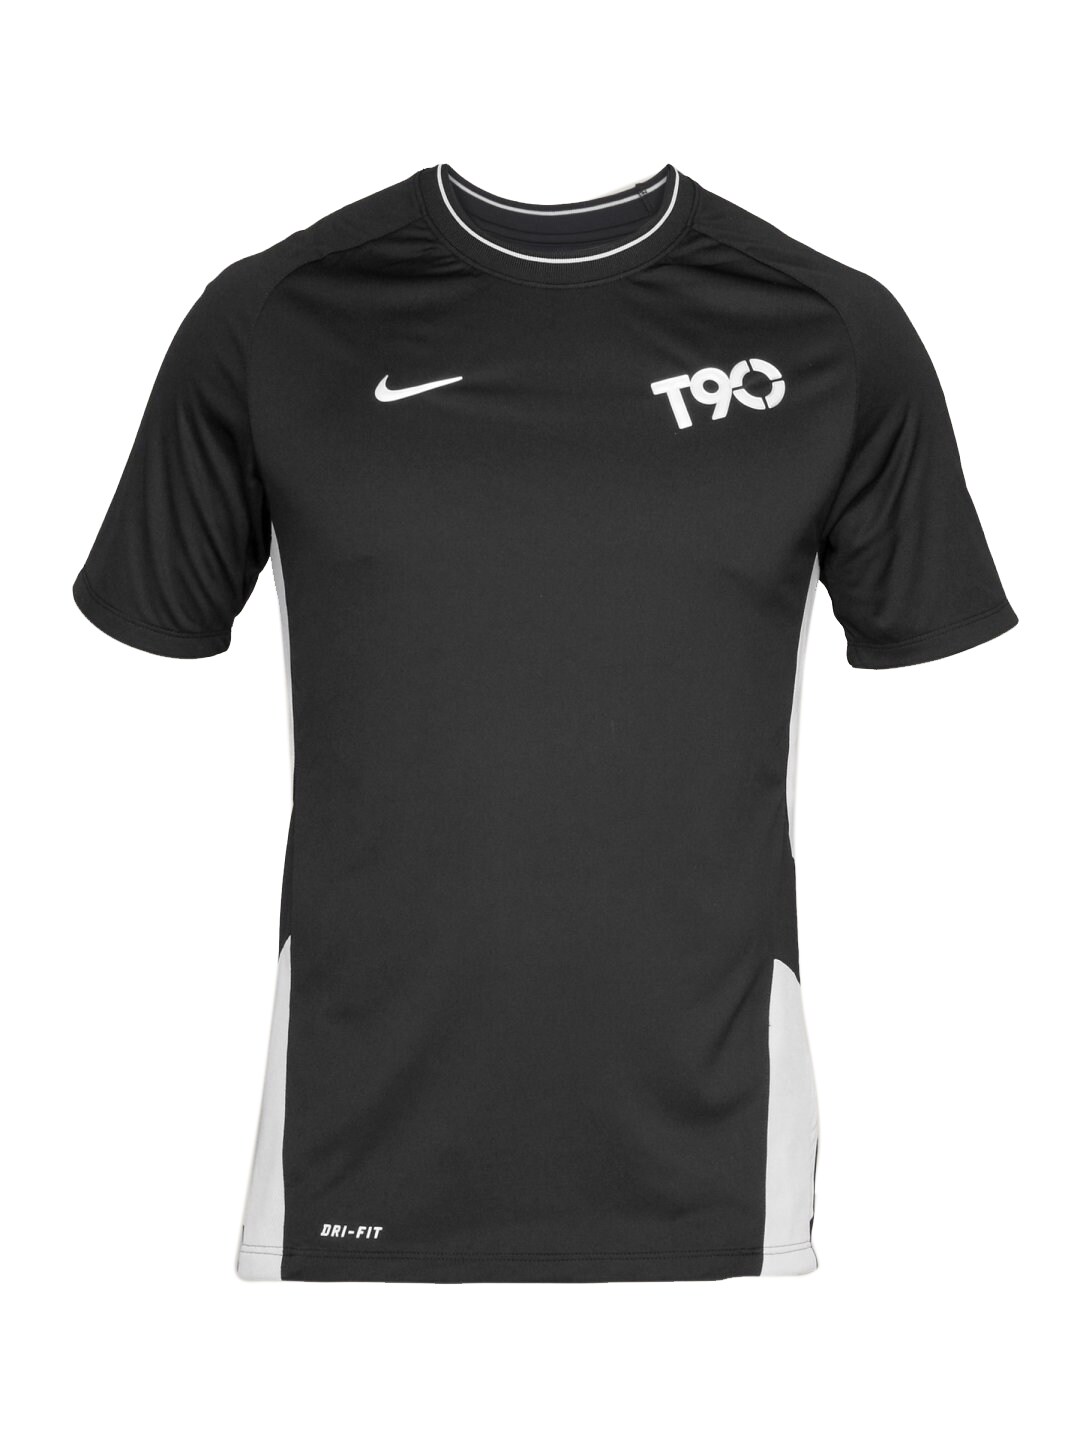 Nike Men's Training Black White T-shirt